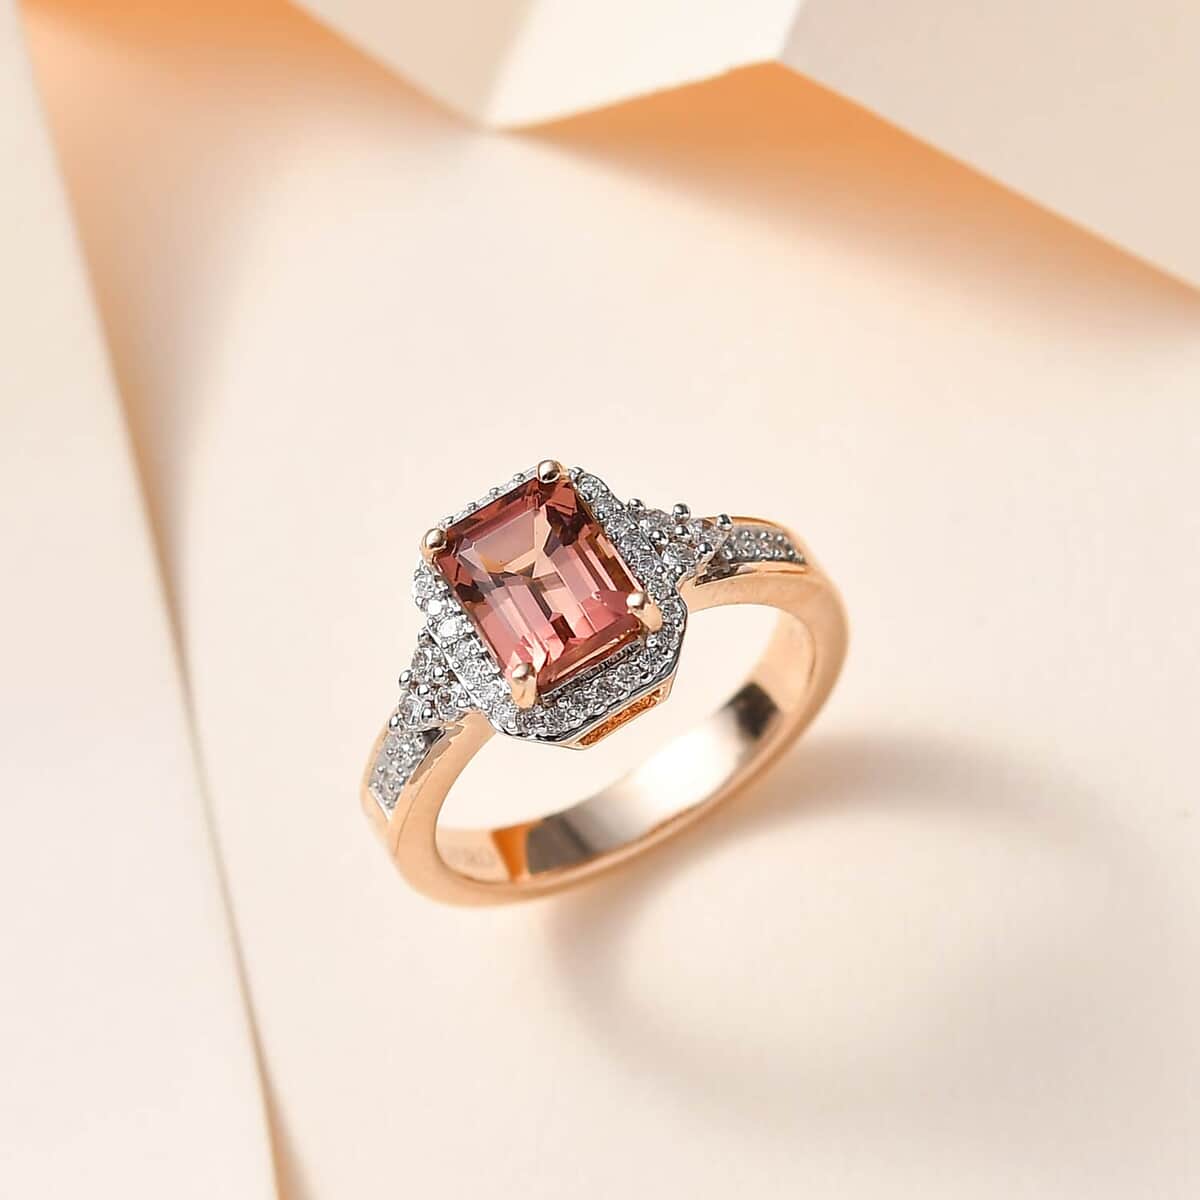 Luxoro 10K Rose Gold Premium Blush Tourmaline and G-H I2 Diamond Halo Ring (Size 8.5) 4.75 Grams 2.10 ctw image number 1